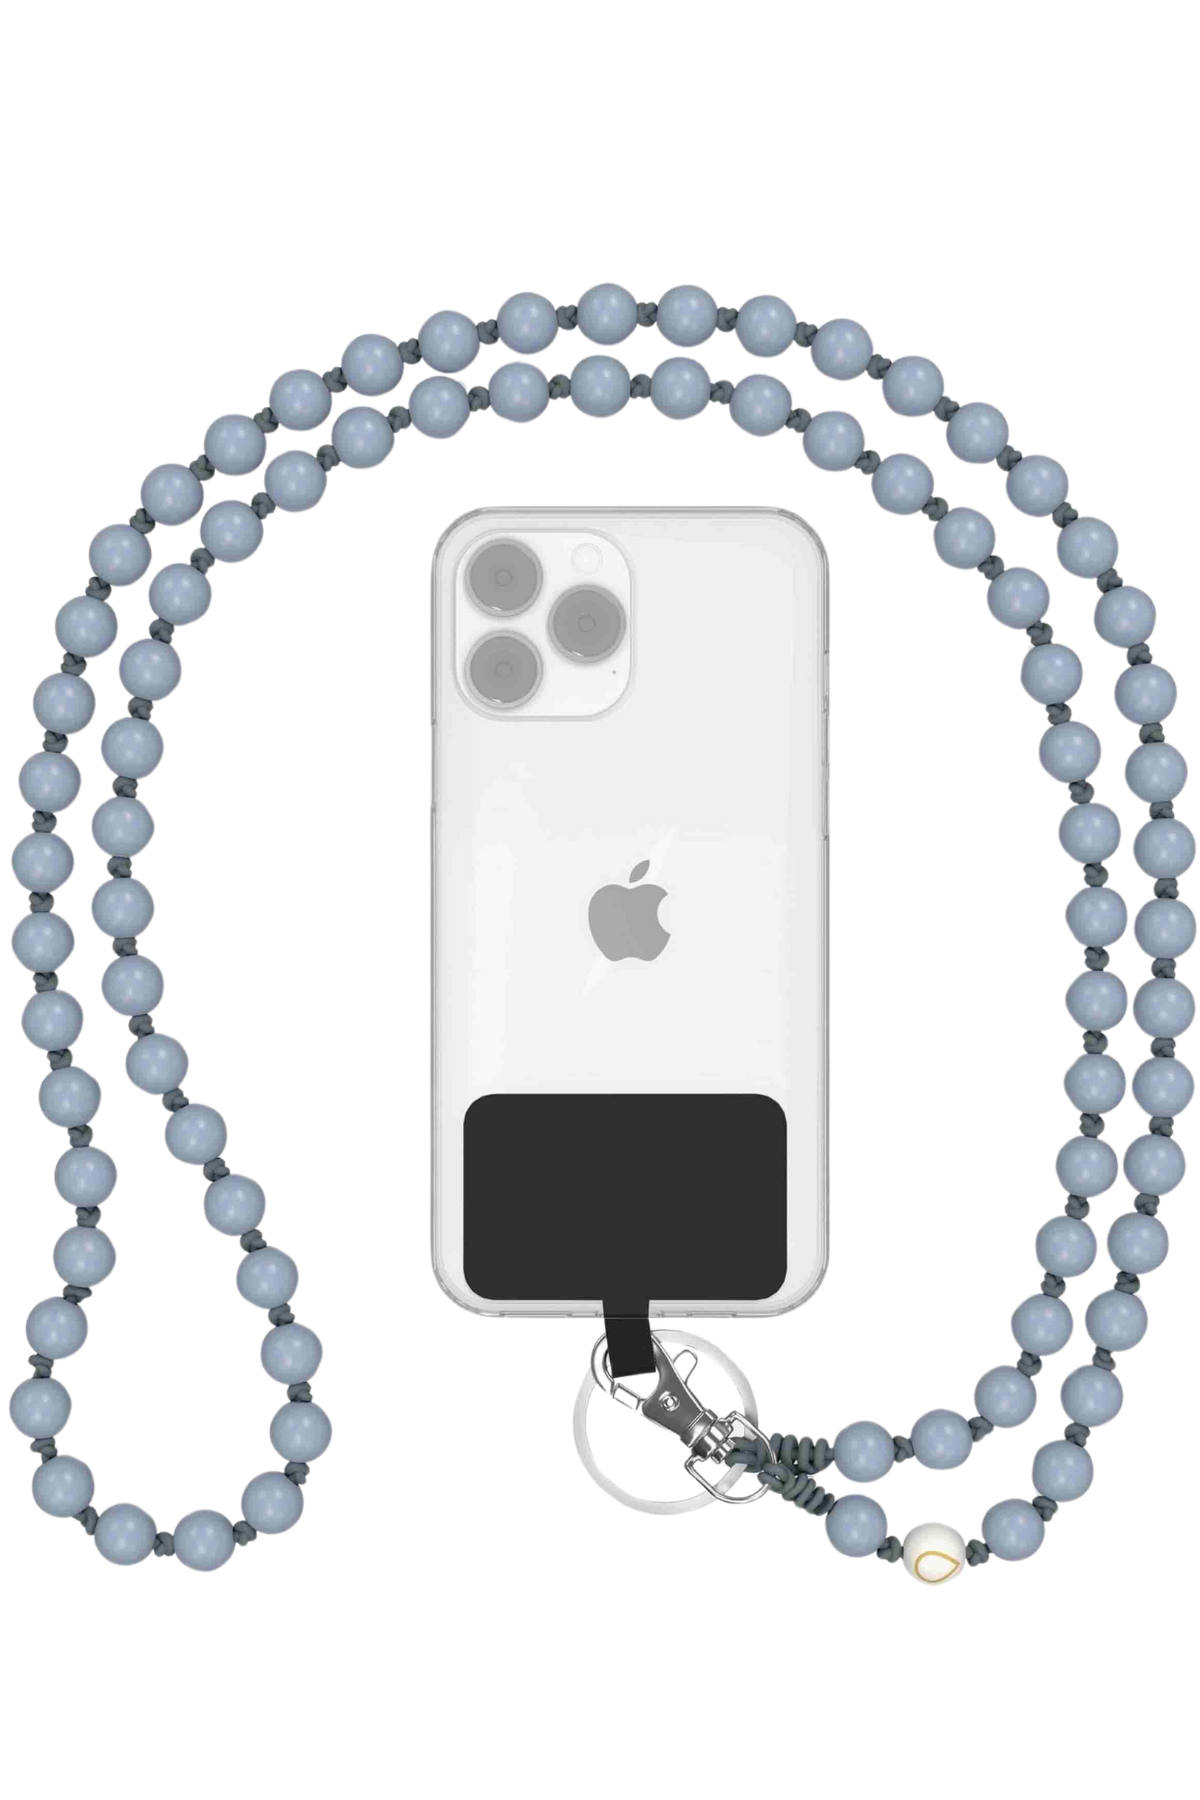 The Shark Beaded Cellphone Chain-Dropletsy